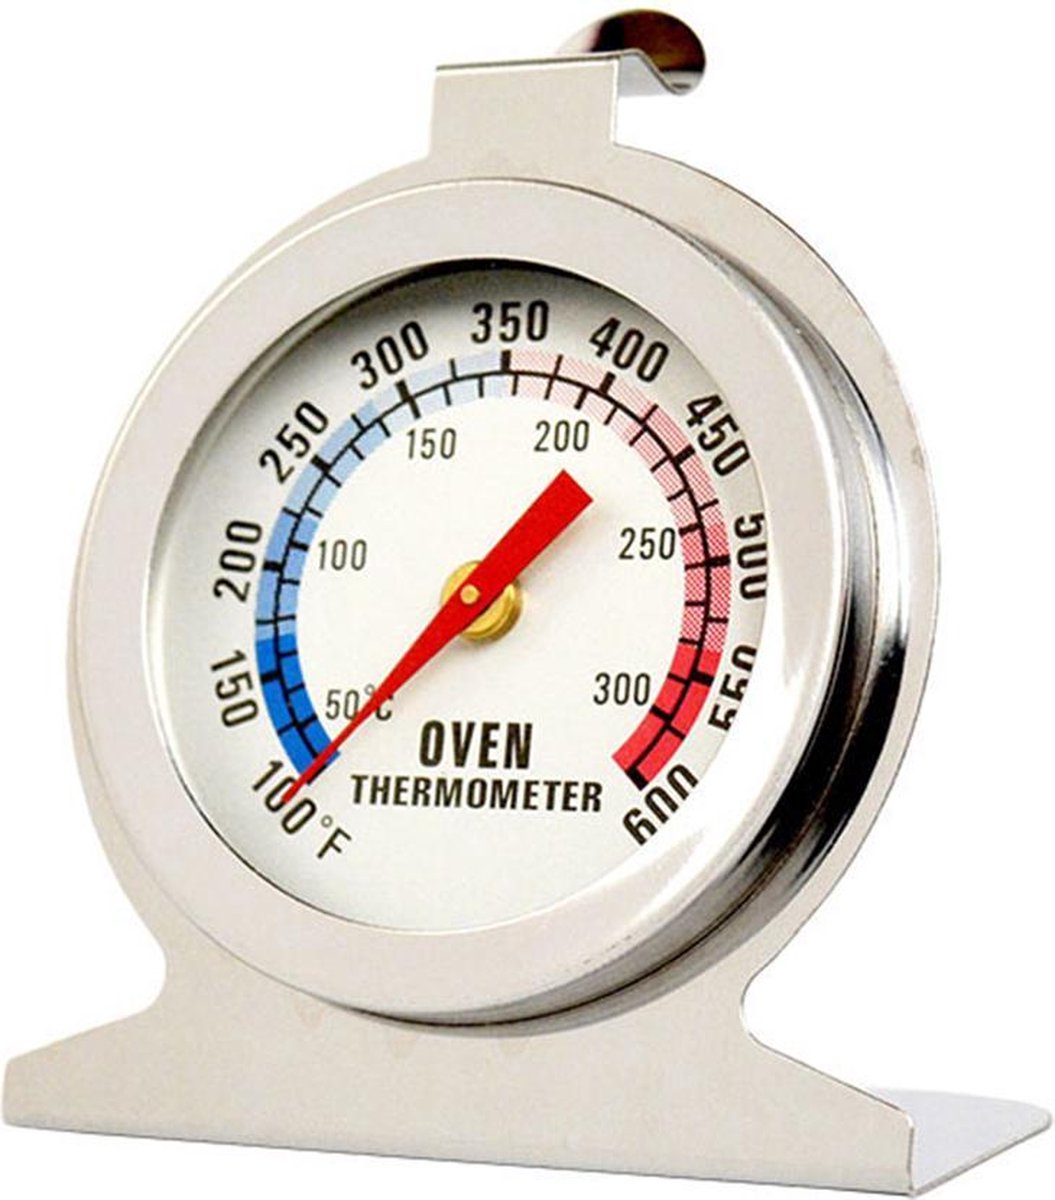 Oventhermometer - Thermometer Oven - Rookoven Temperatuurmeter - Keukenthermometer - Merkloos